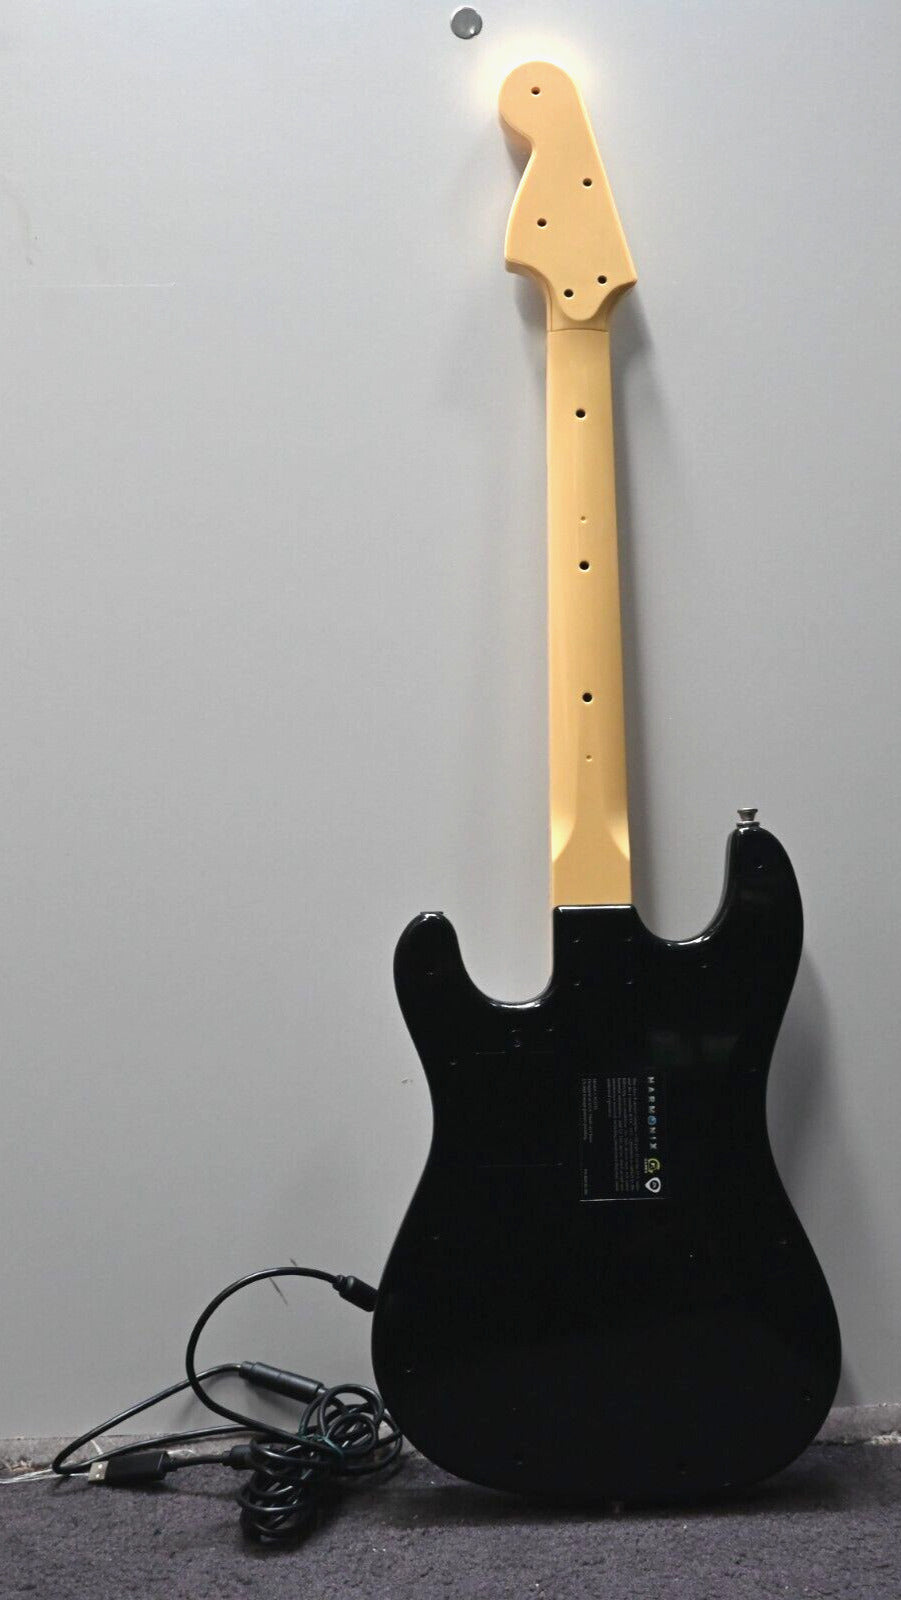 Guitar Hero Fender Stratocaster Harmonix Wired Guitar - Xbox 360 Accessory